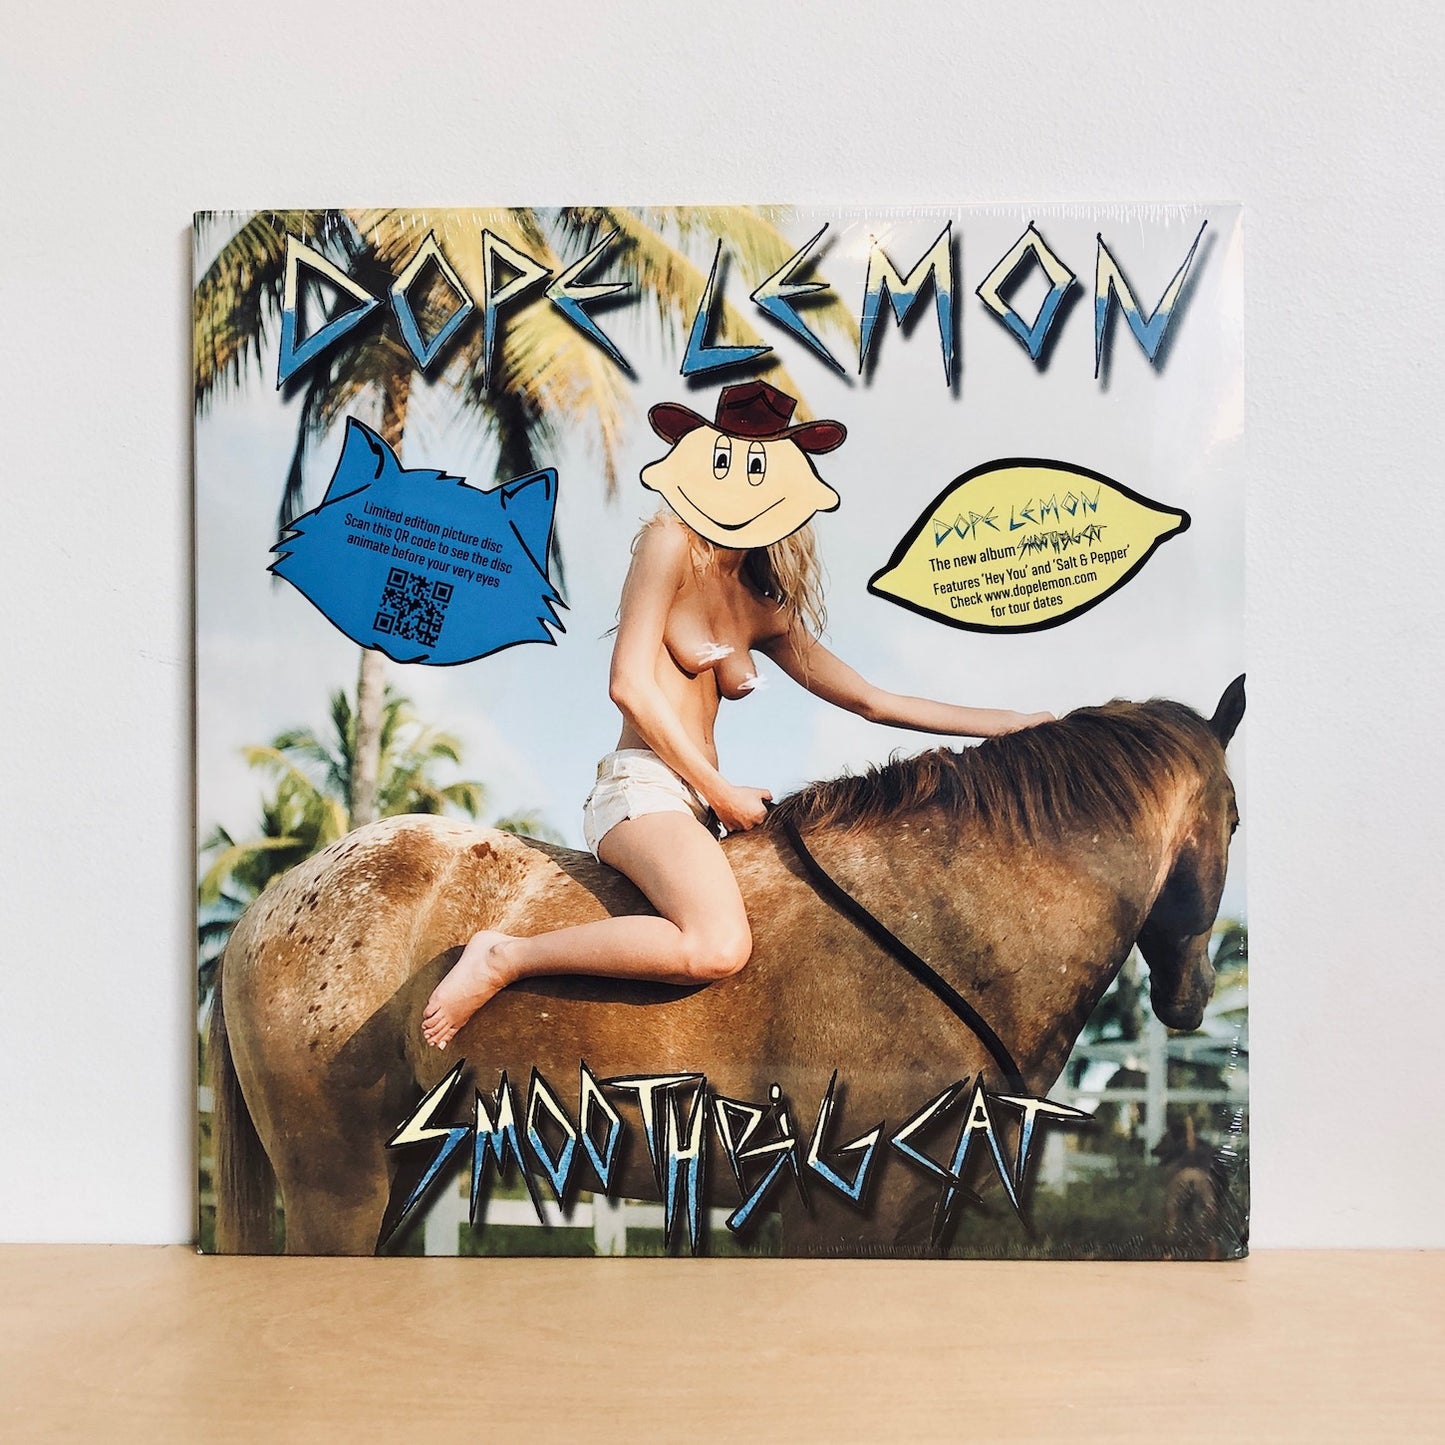 Dope Lemon - Smooth Big Cat. LP [Ltd. Ed. Picture Disc Vinyl]